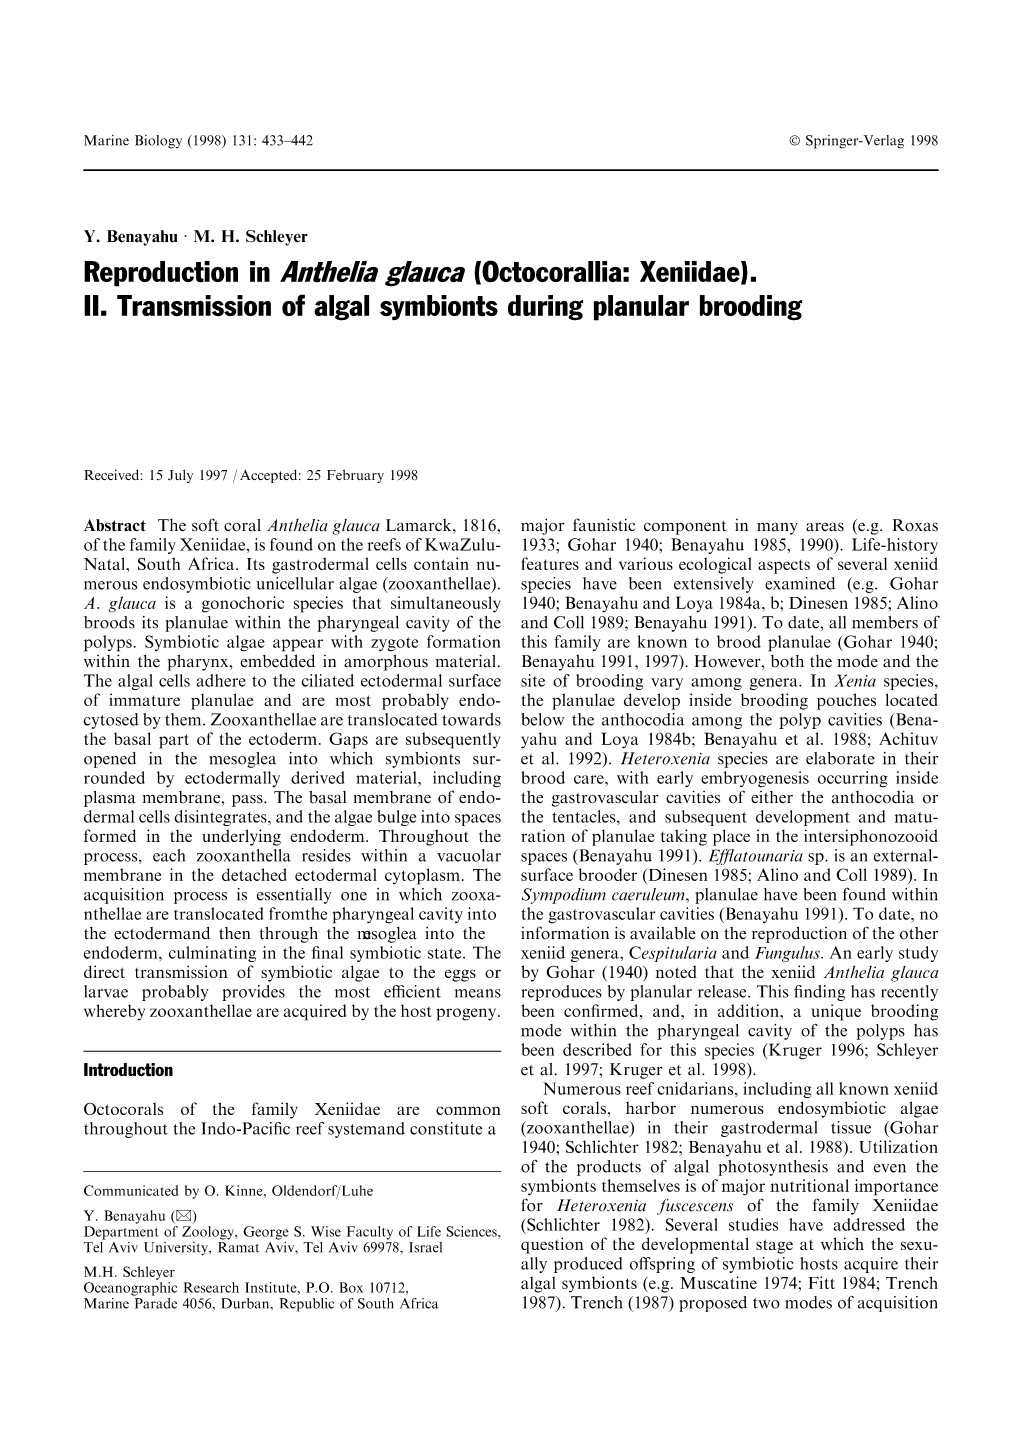 Reproduction in Anthelia Glauca (Octocorallia: Xeniidae). II